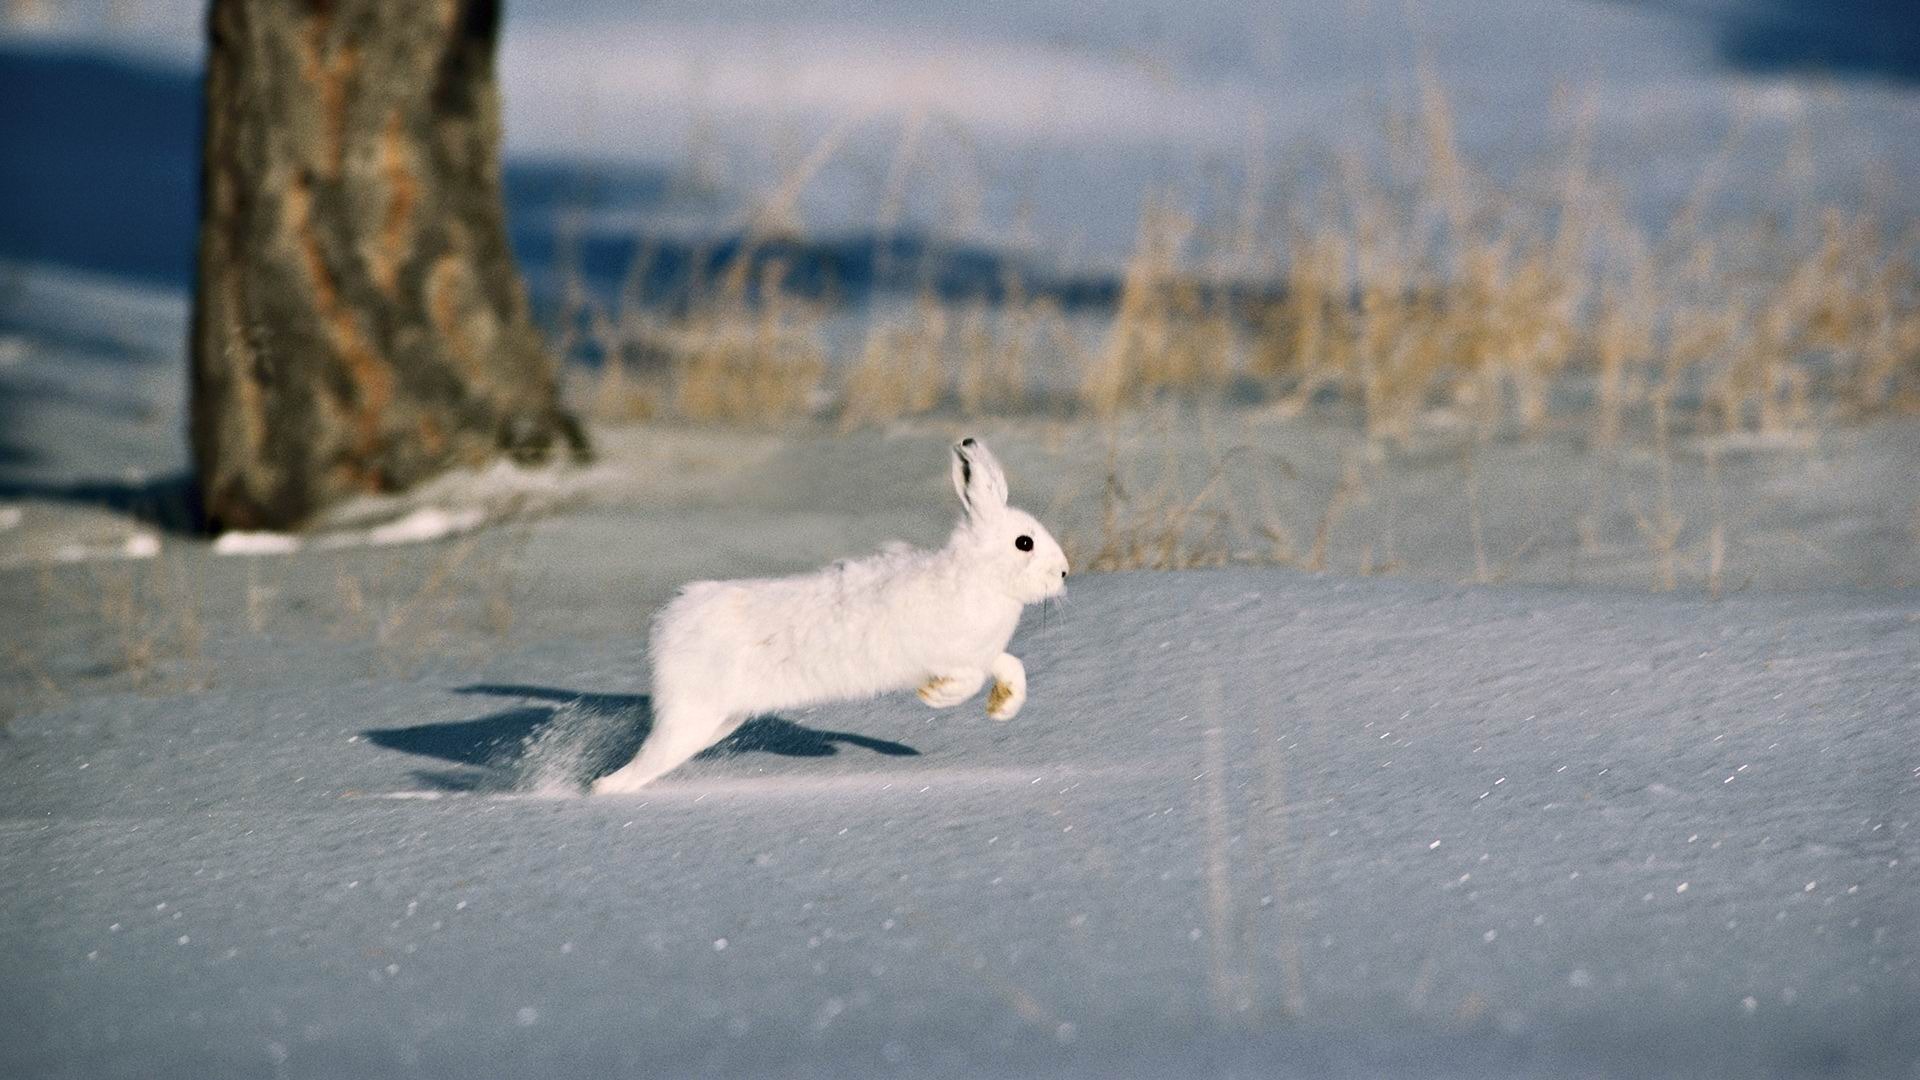 snow trees rodent fur coat rabbit